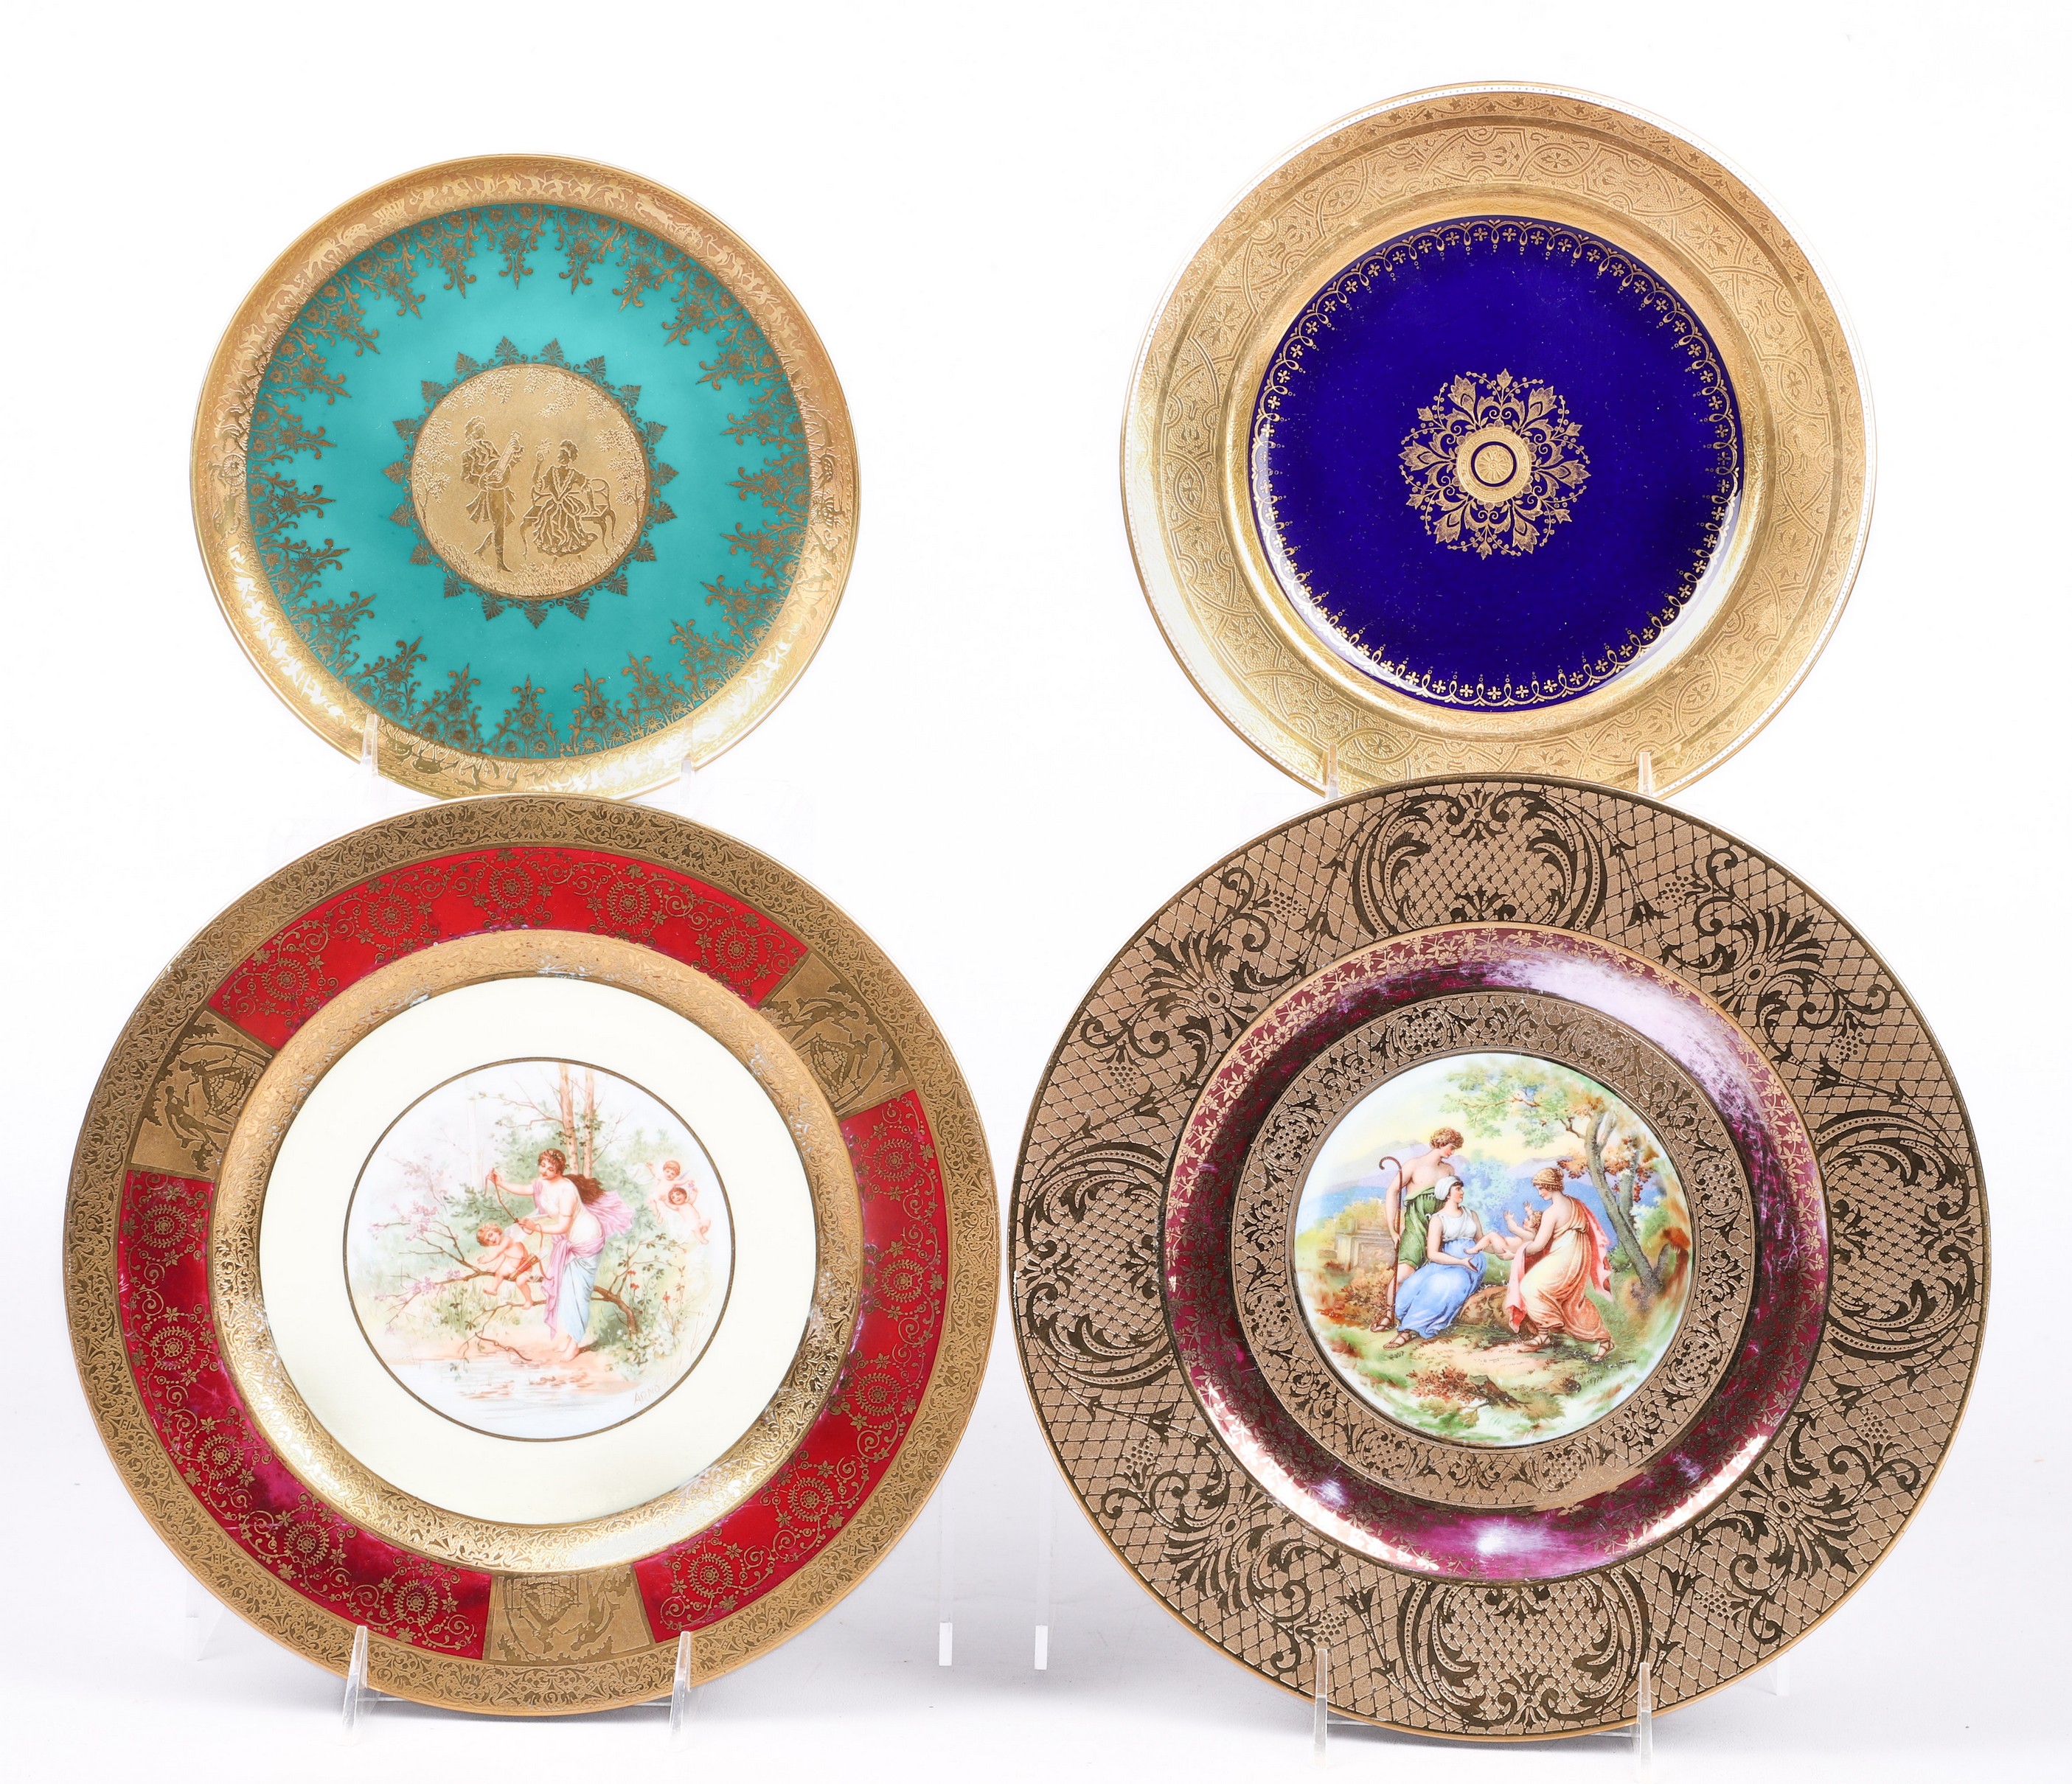  4 Gilded porcelain plates to 2e080c